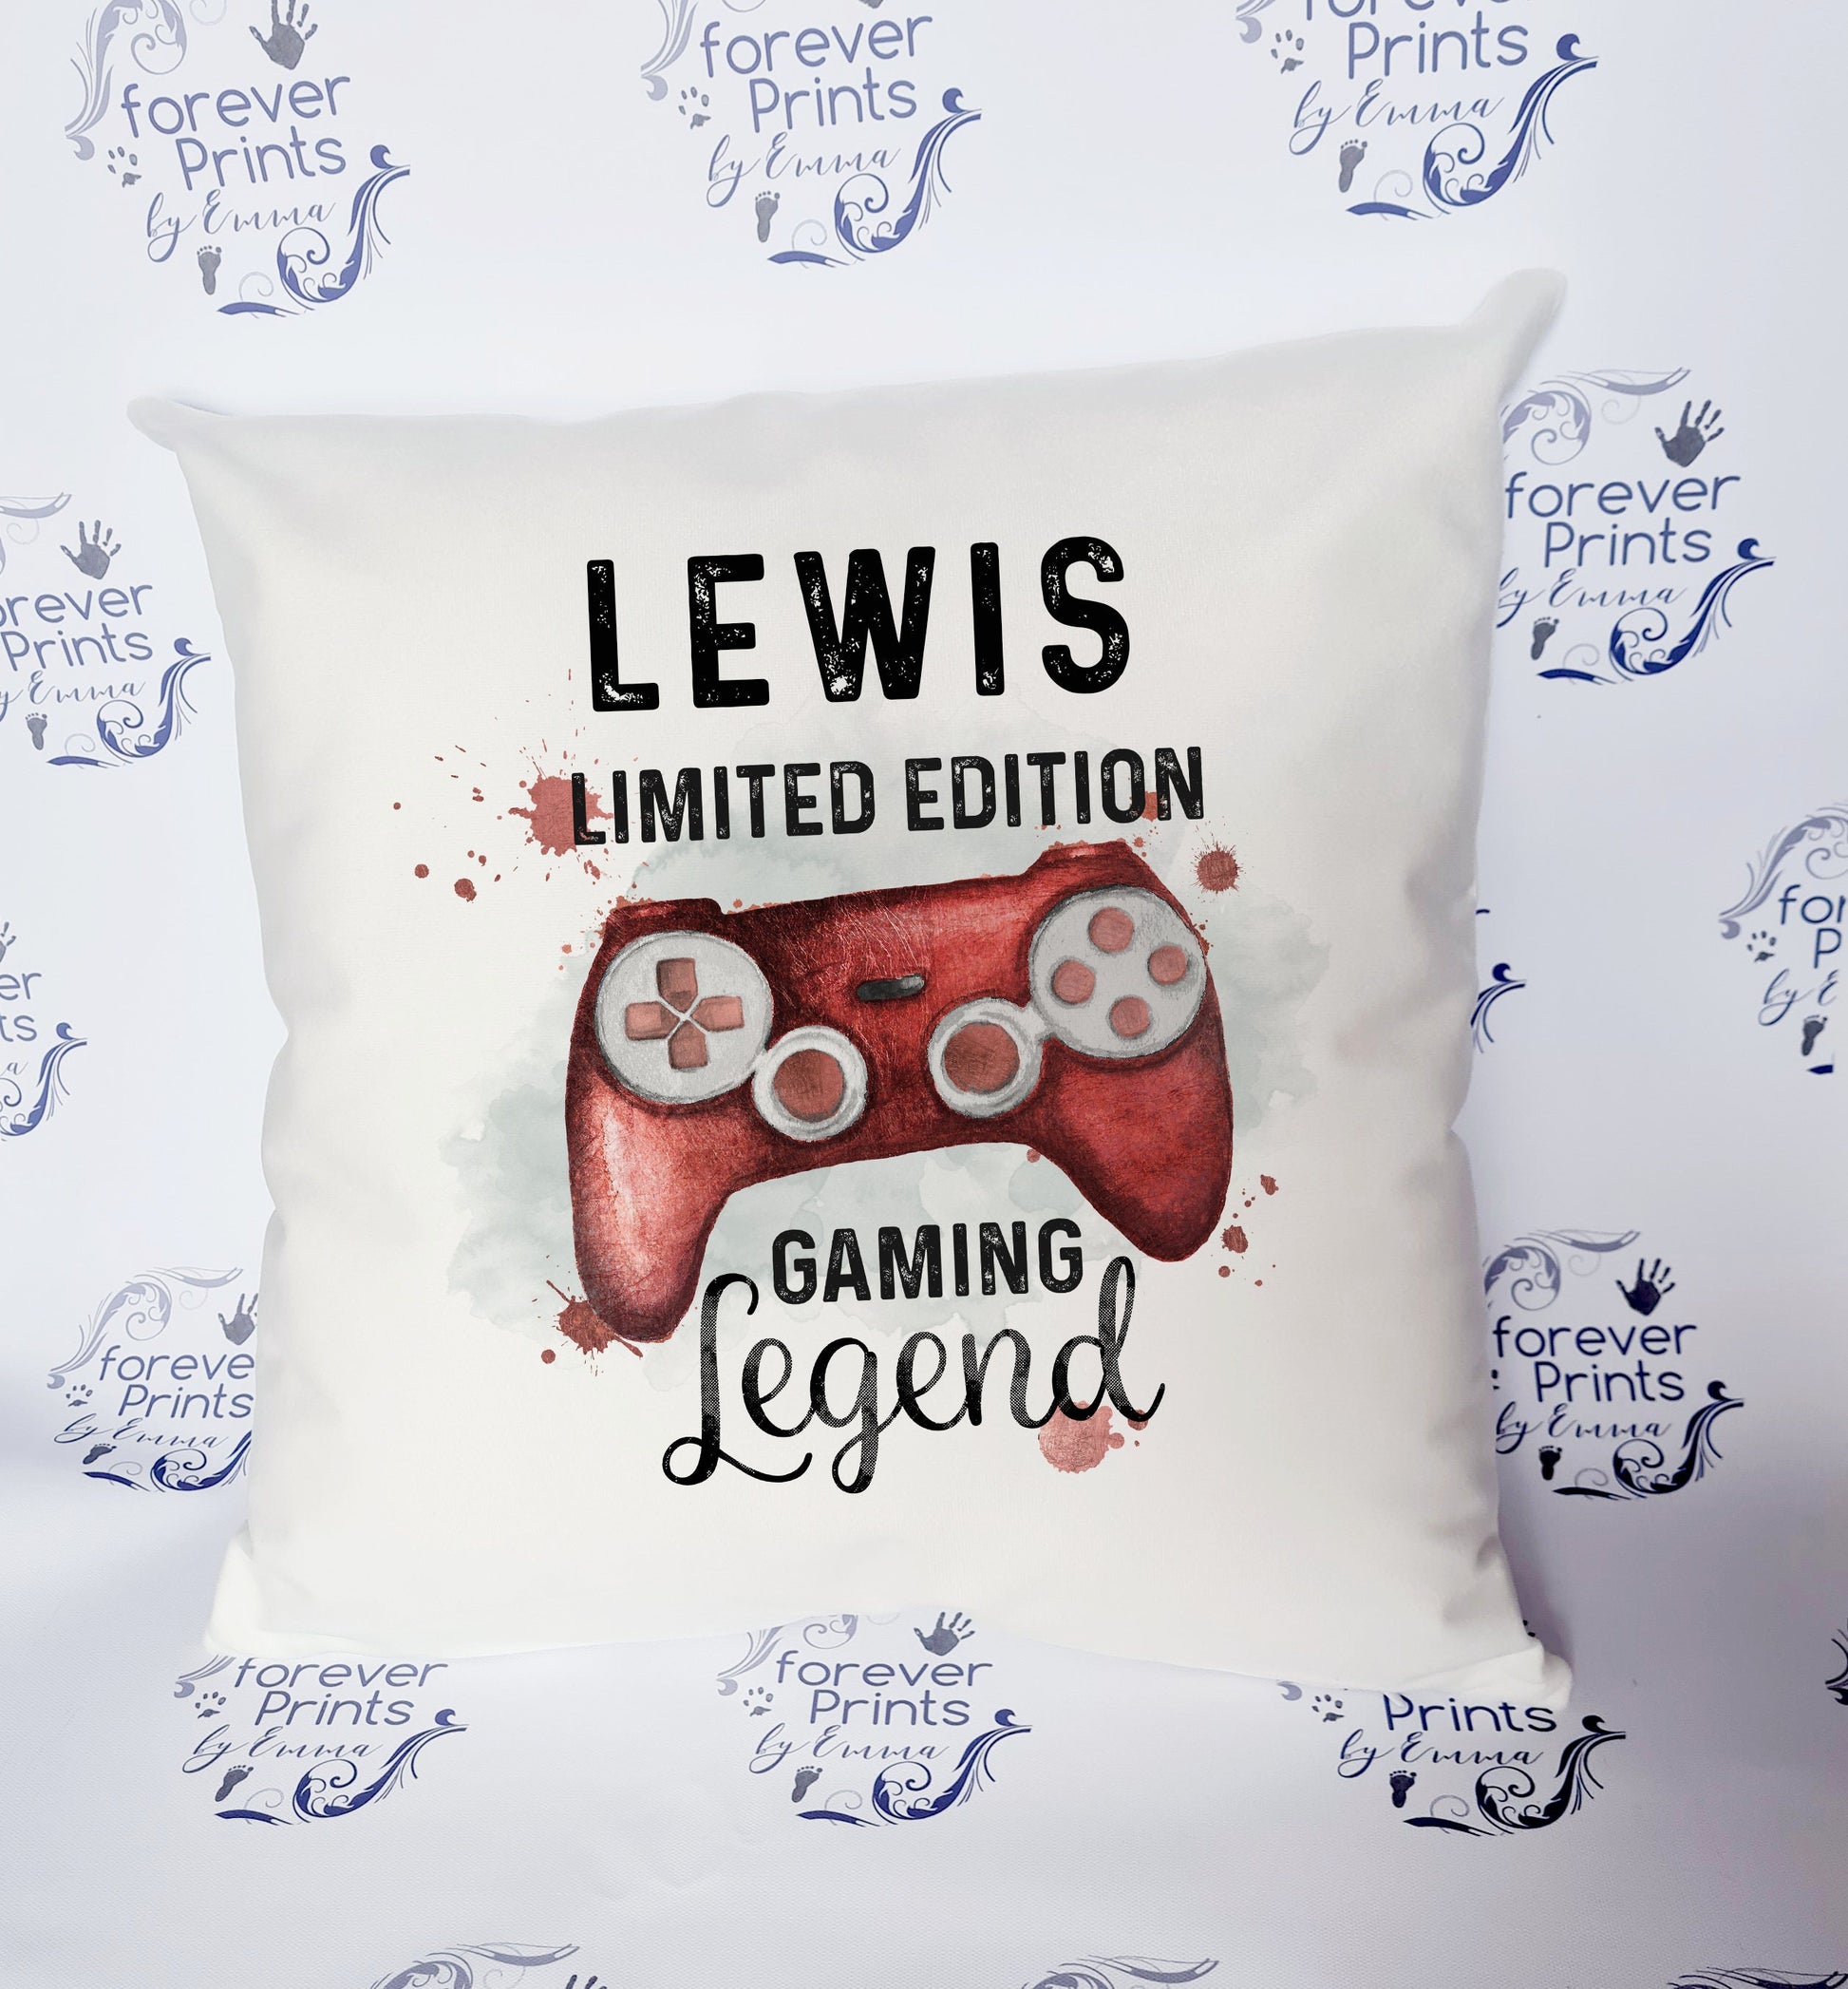 Gamer pillow, gamer cushion, playstation cushion, Gamer legend